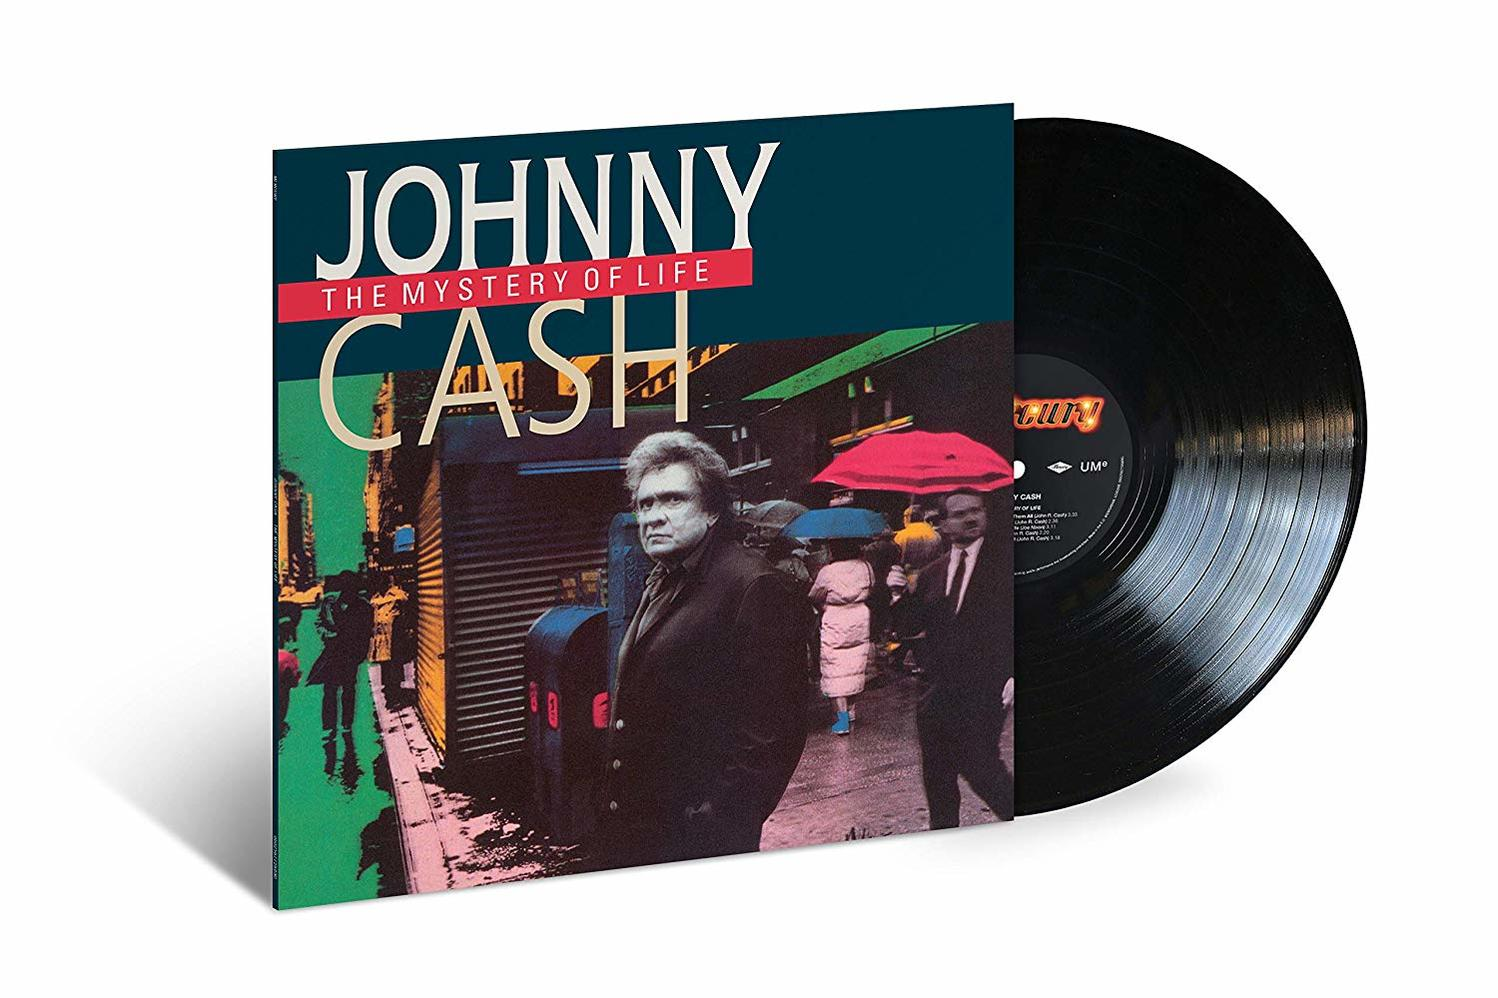 Johnny Cash - VINYL) LIFE (Vinyl) OF THE MYSTERY (REMASTERED 